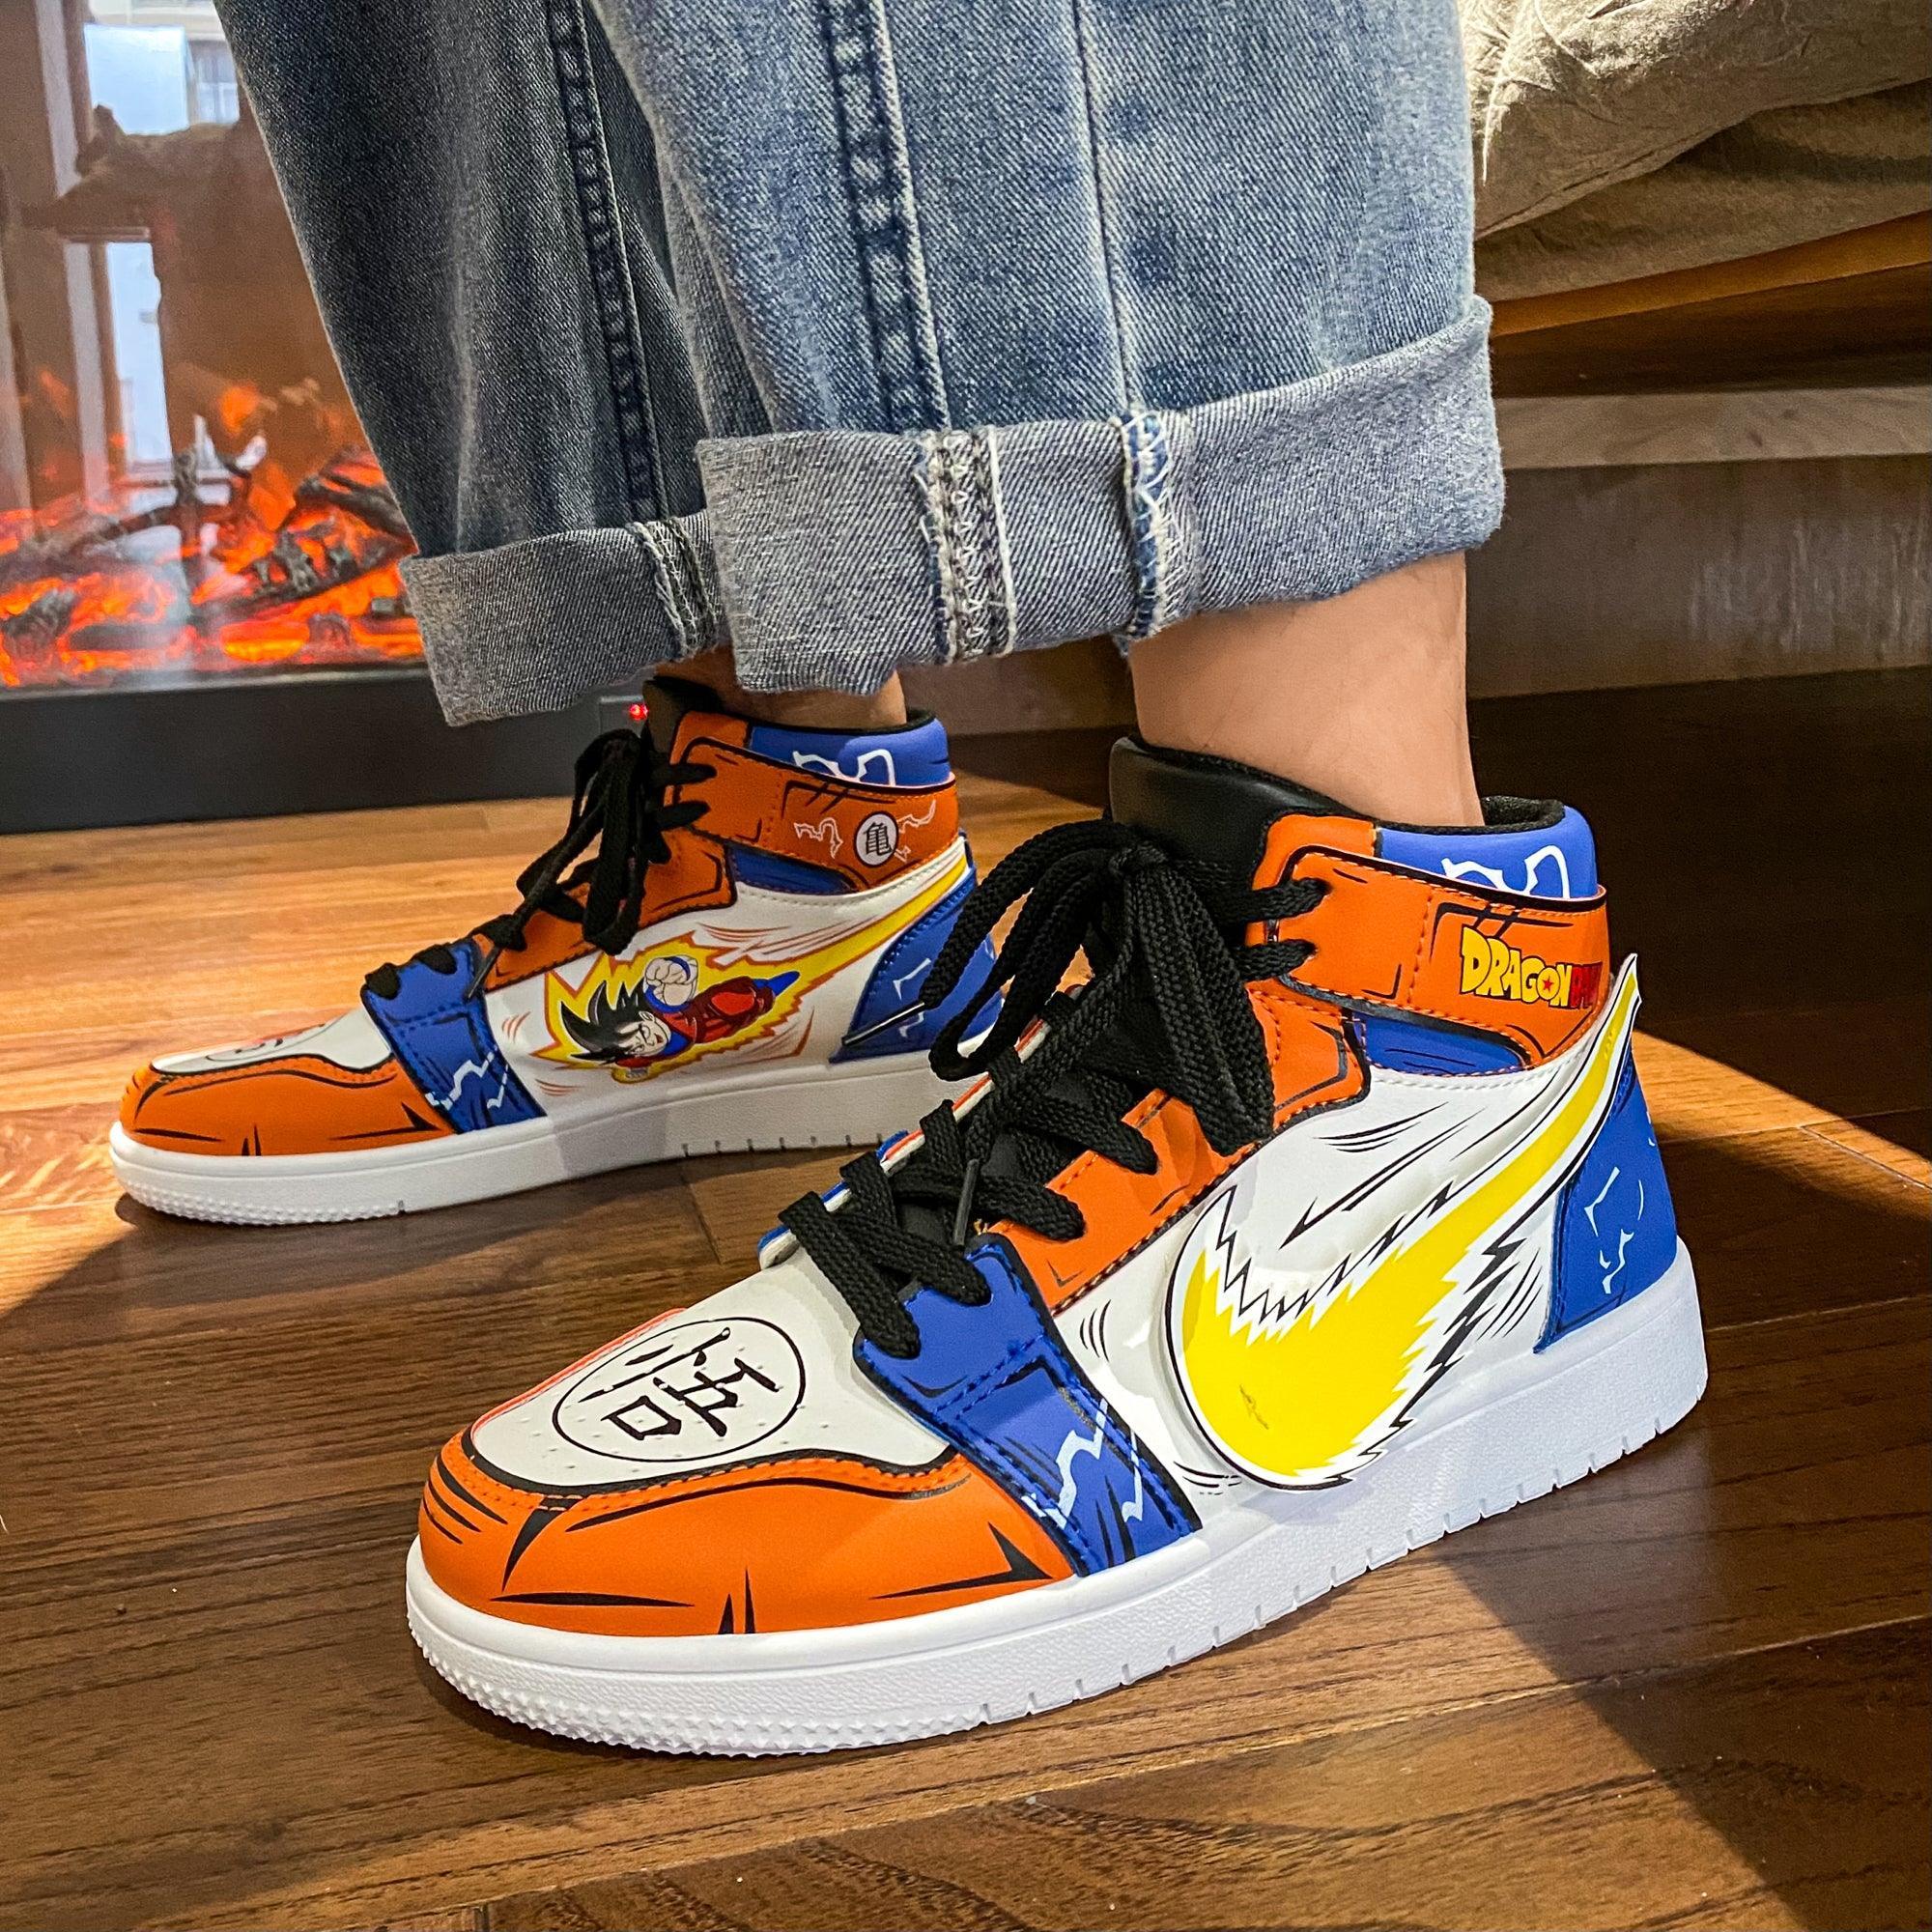 Dragon Ball - Goku Orange High Top Sneakers Shoes 8 Men